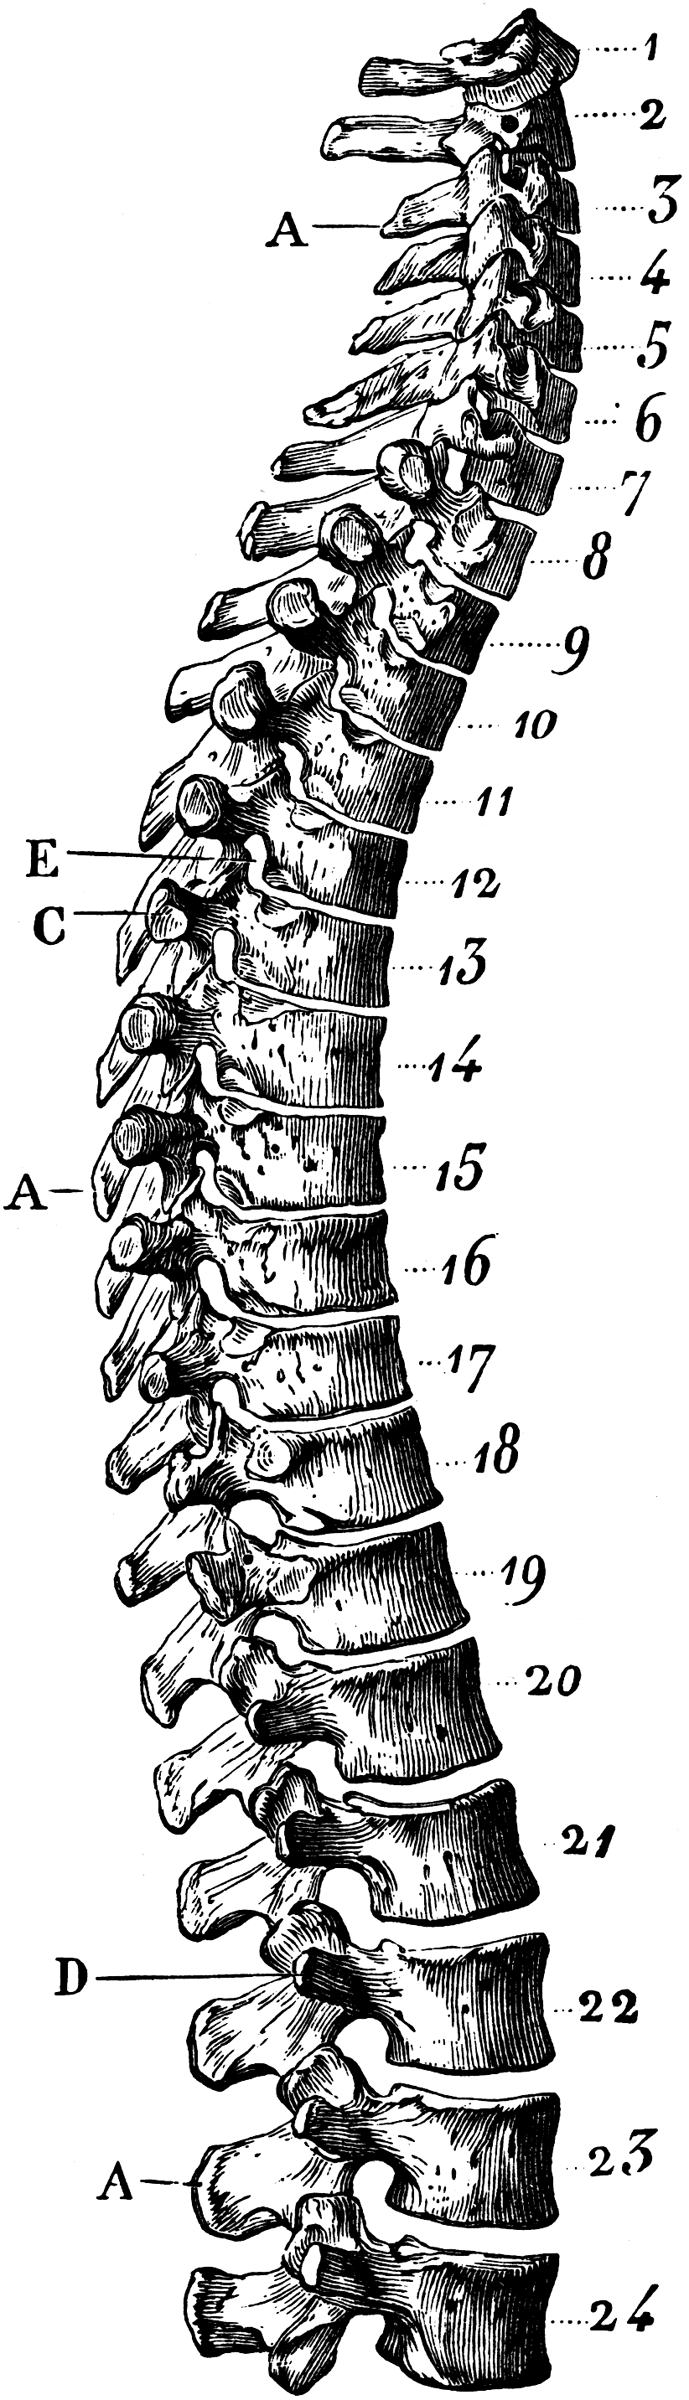 free clip art human spine - photo #20